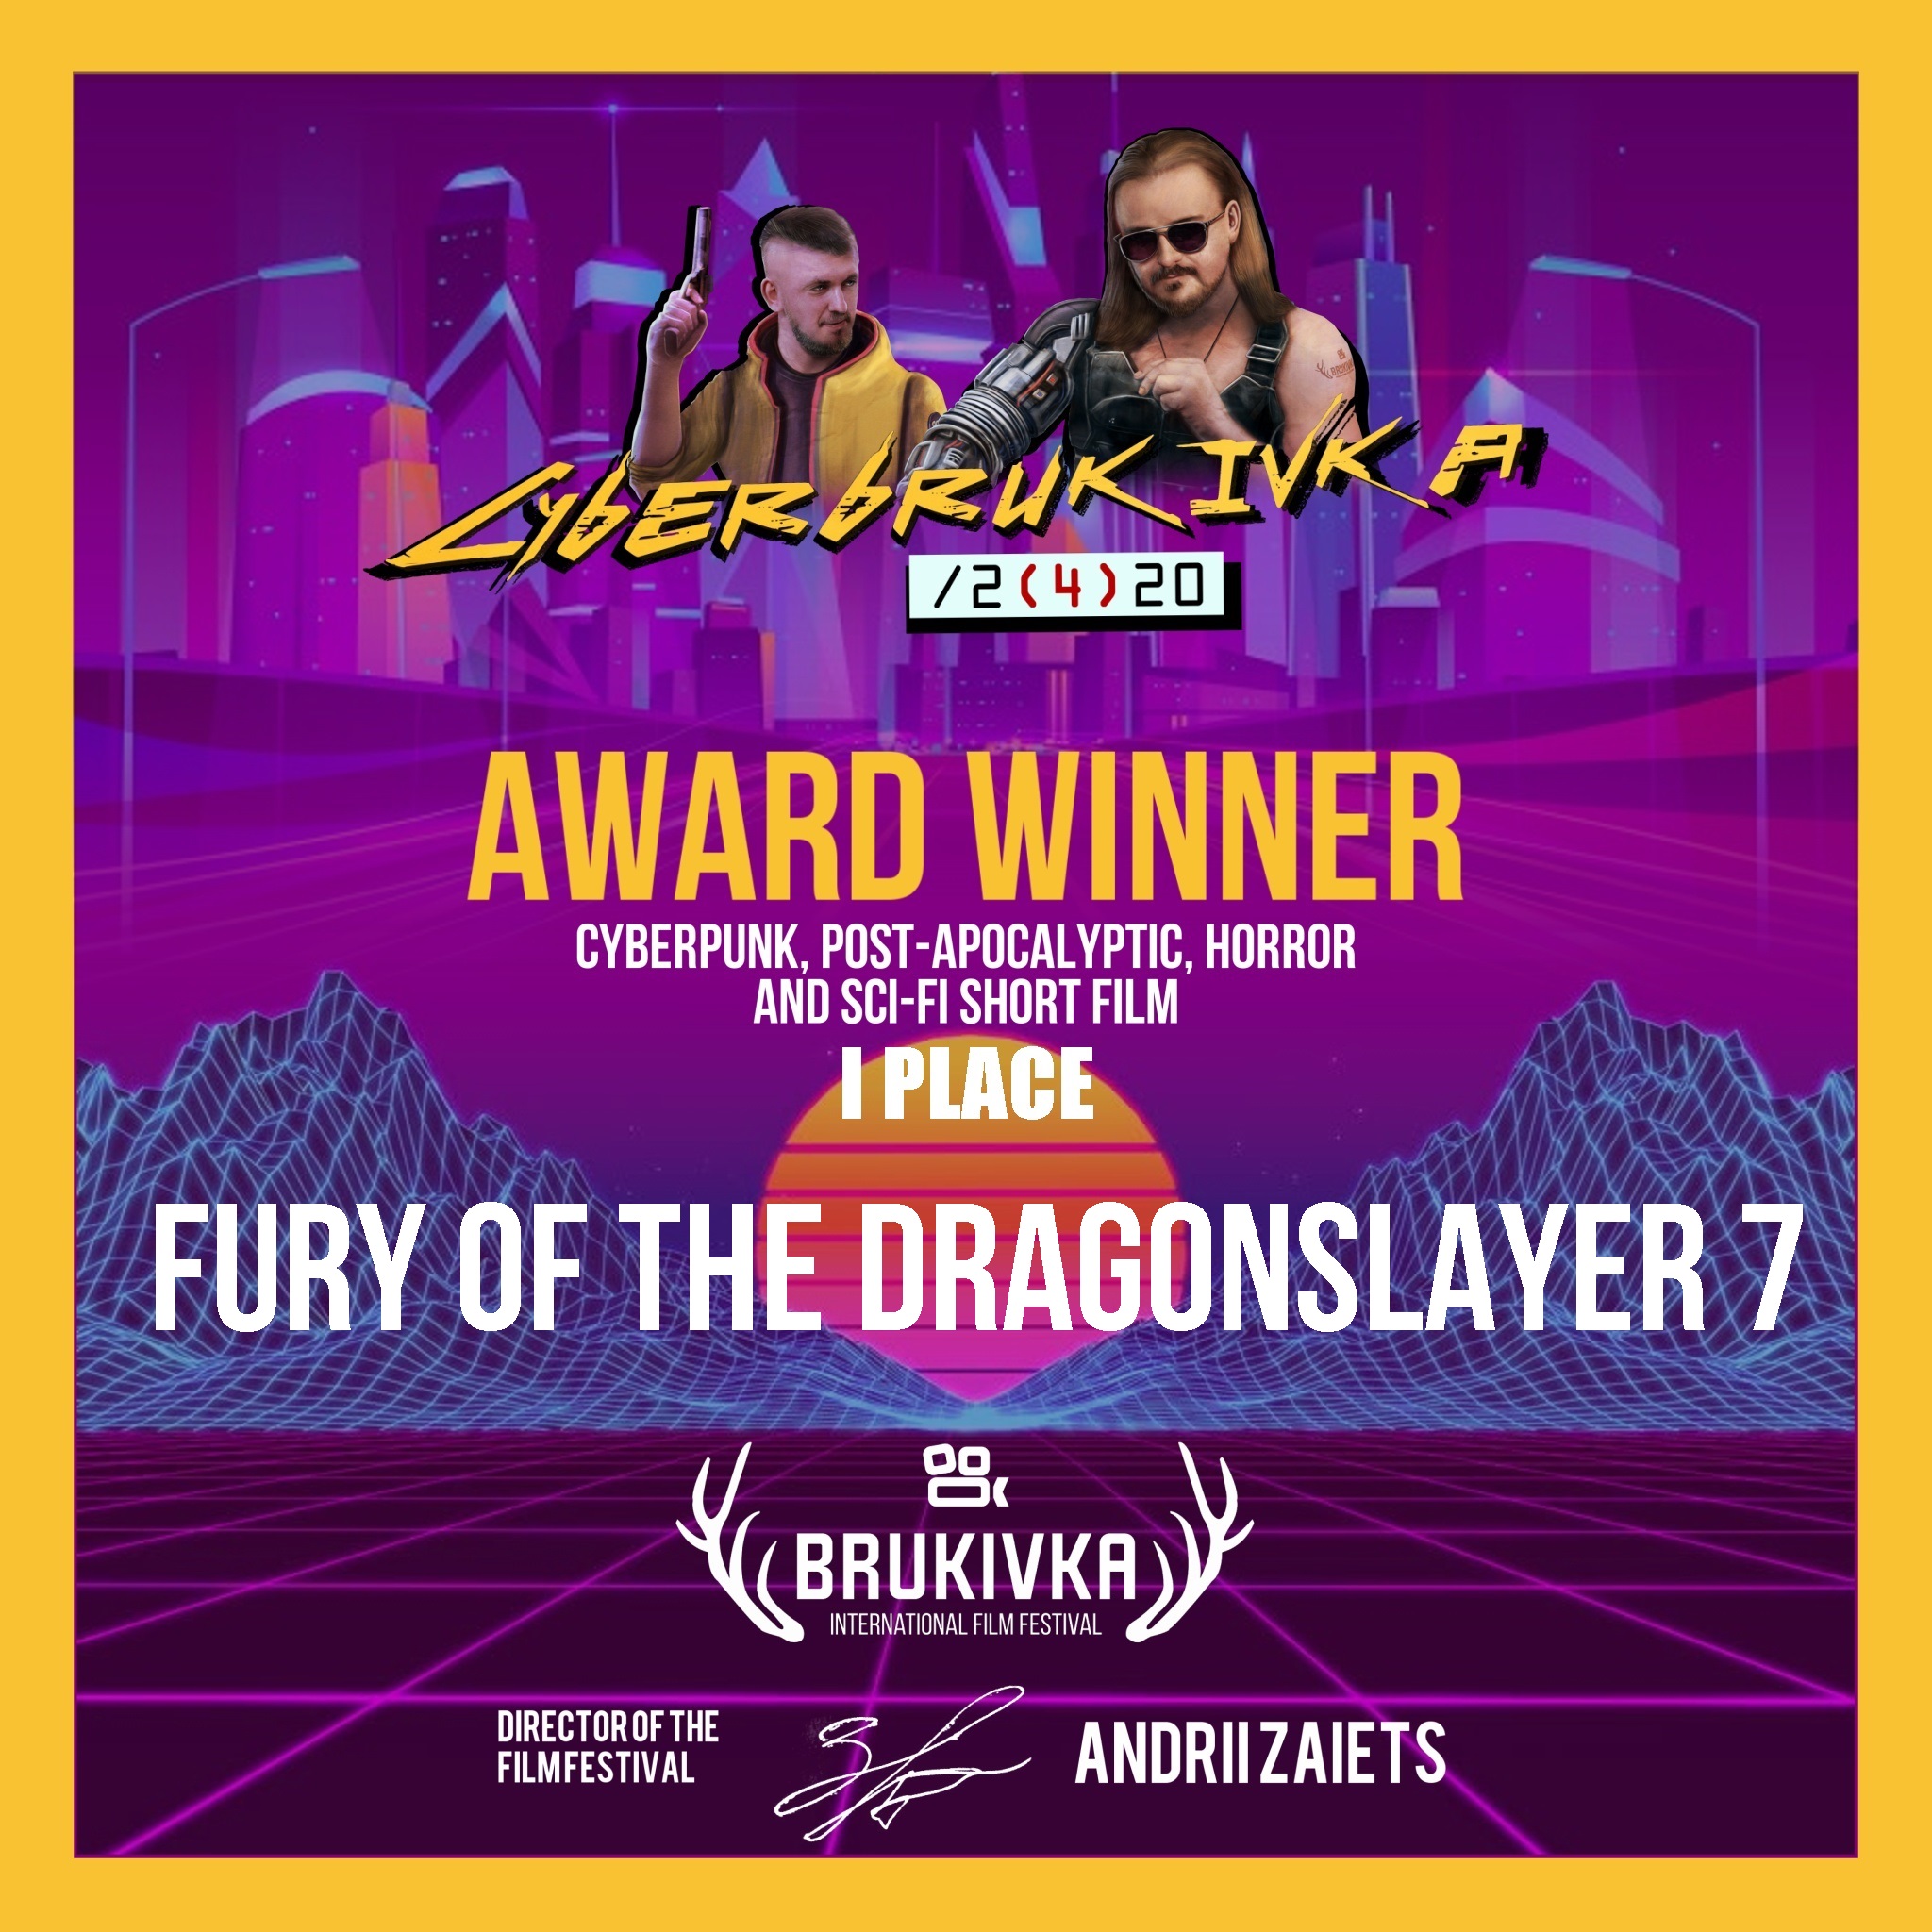 Fury of the dragonslayer 7